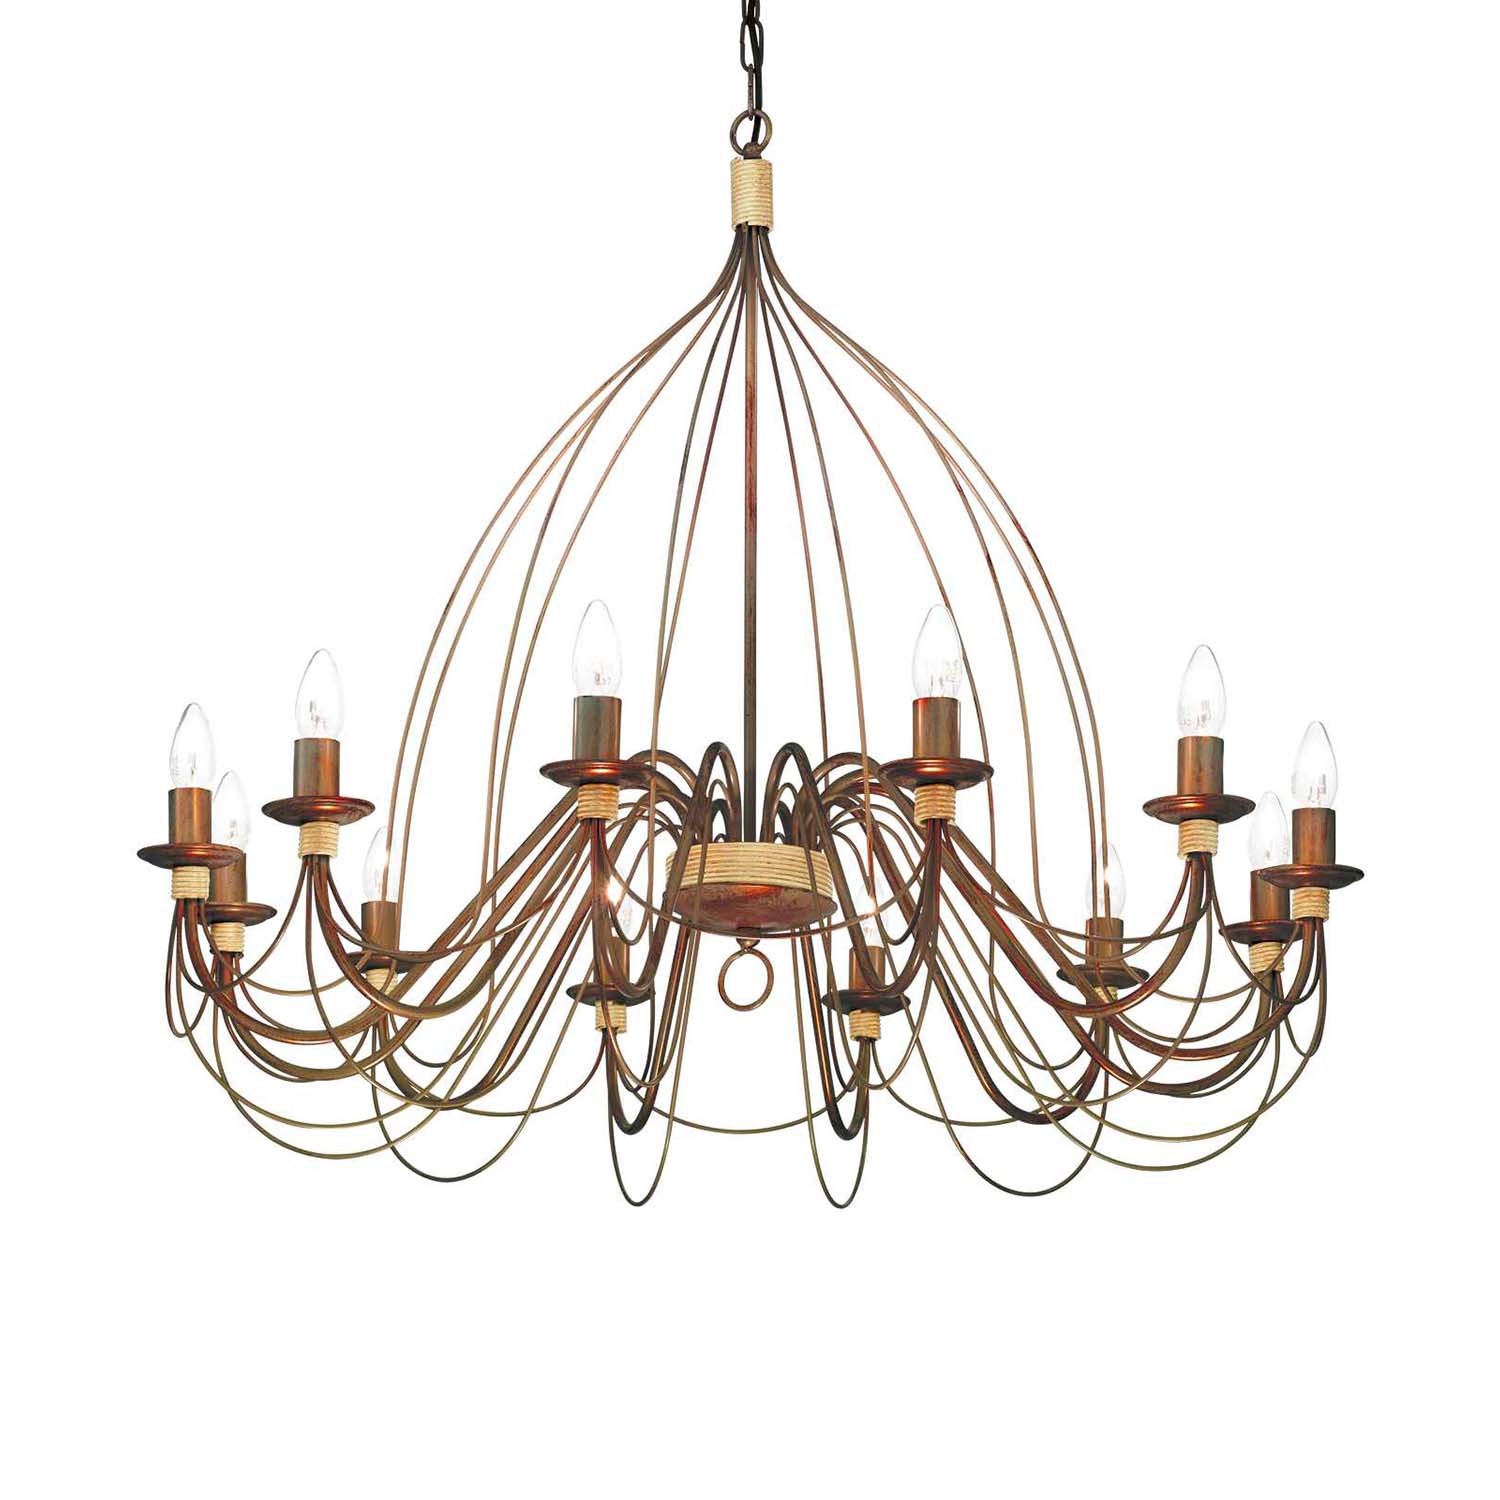 CORTE - Old style bronze chandelier chandelier